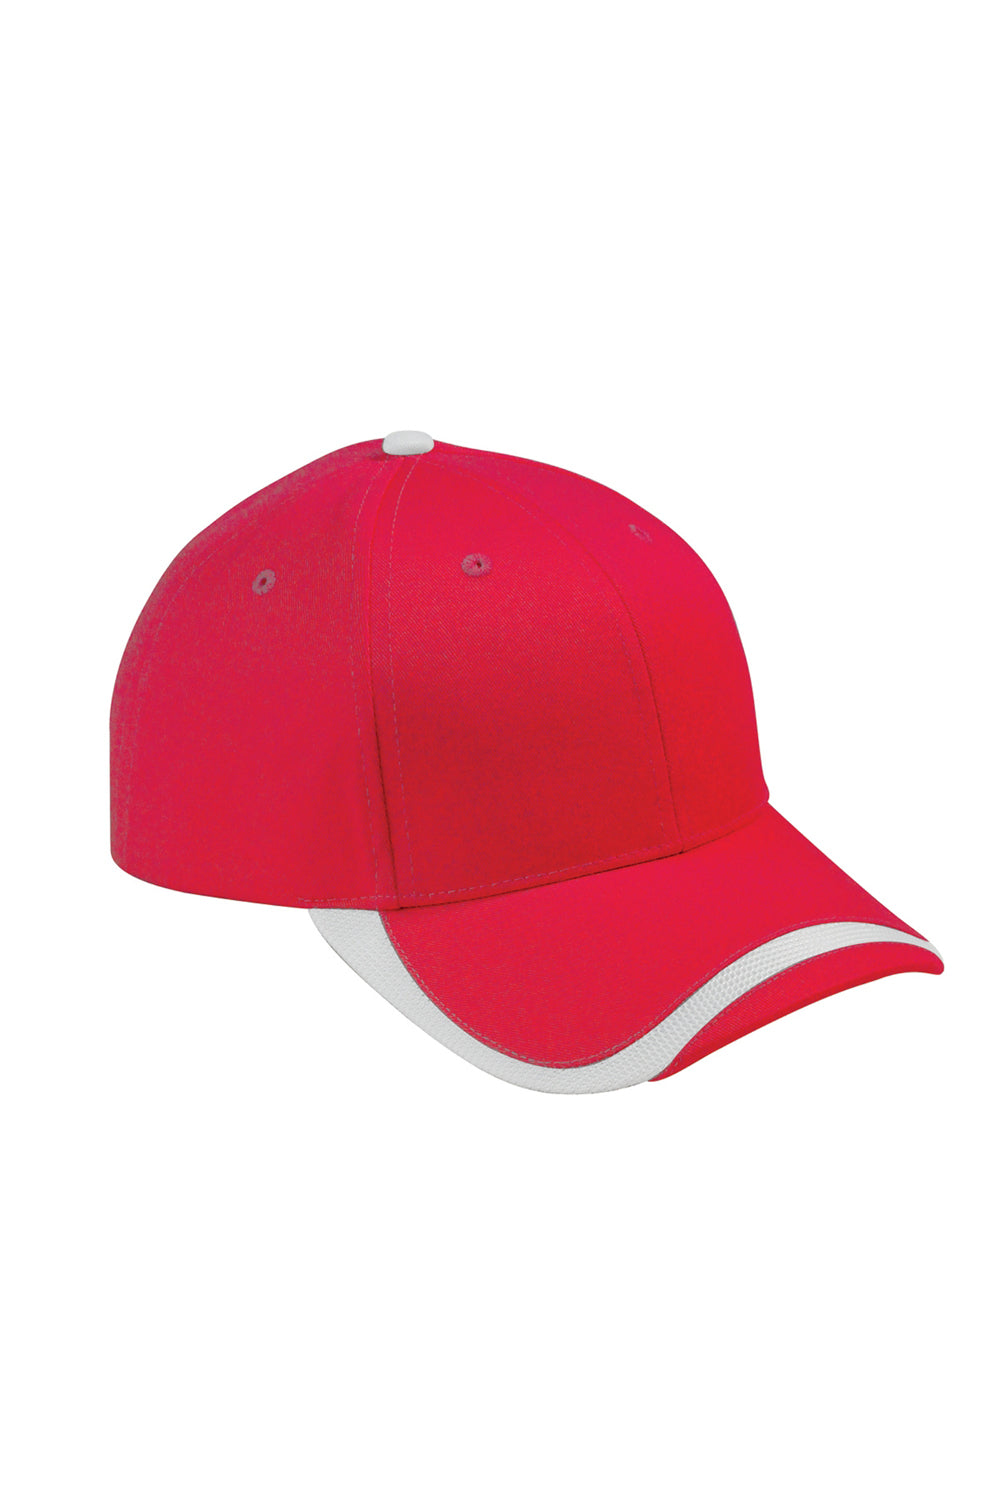 Big Accessories SWTB Mens Sport Wave Adjustable Hat Red Front